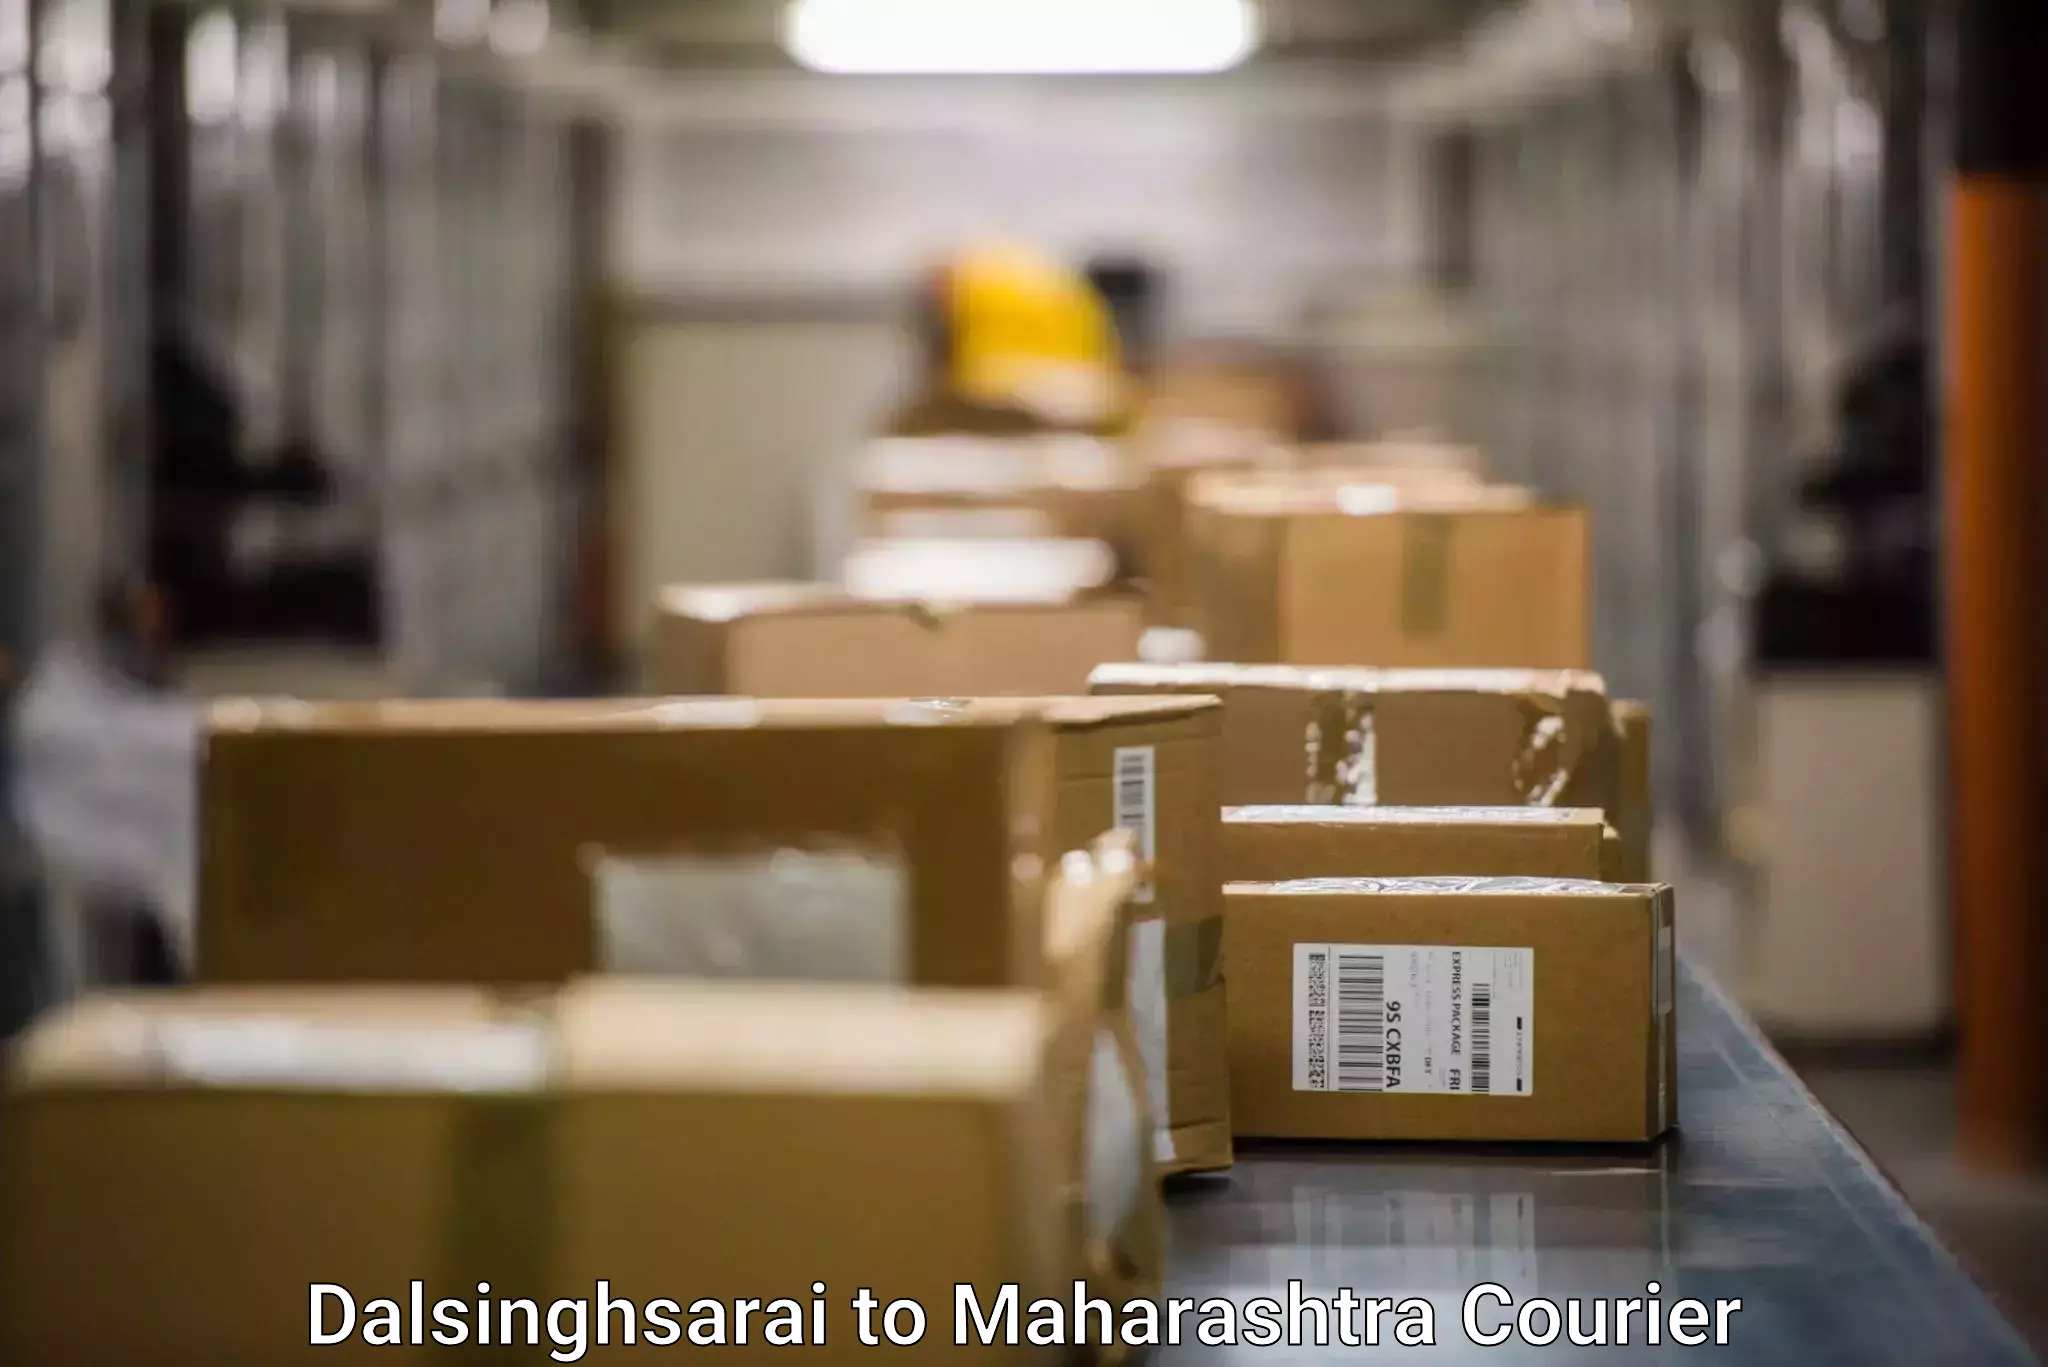 Courier service innovation Dalsinghsarai to Maharashtra